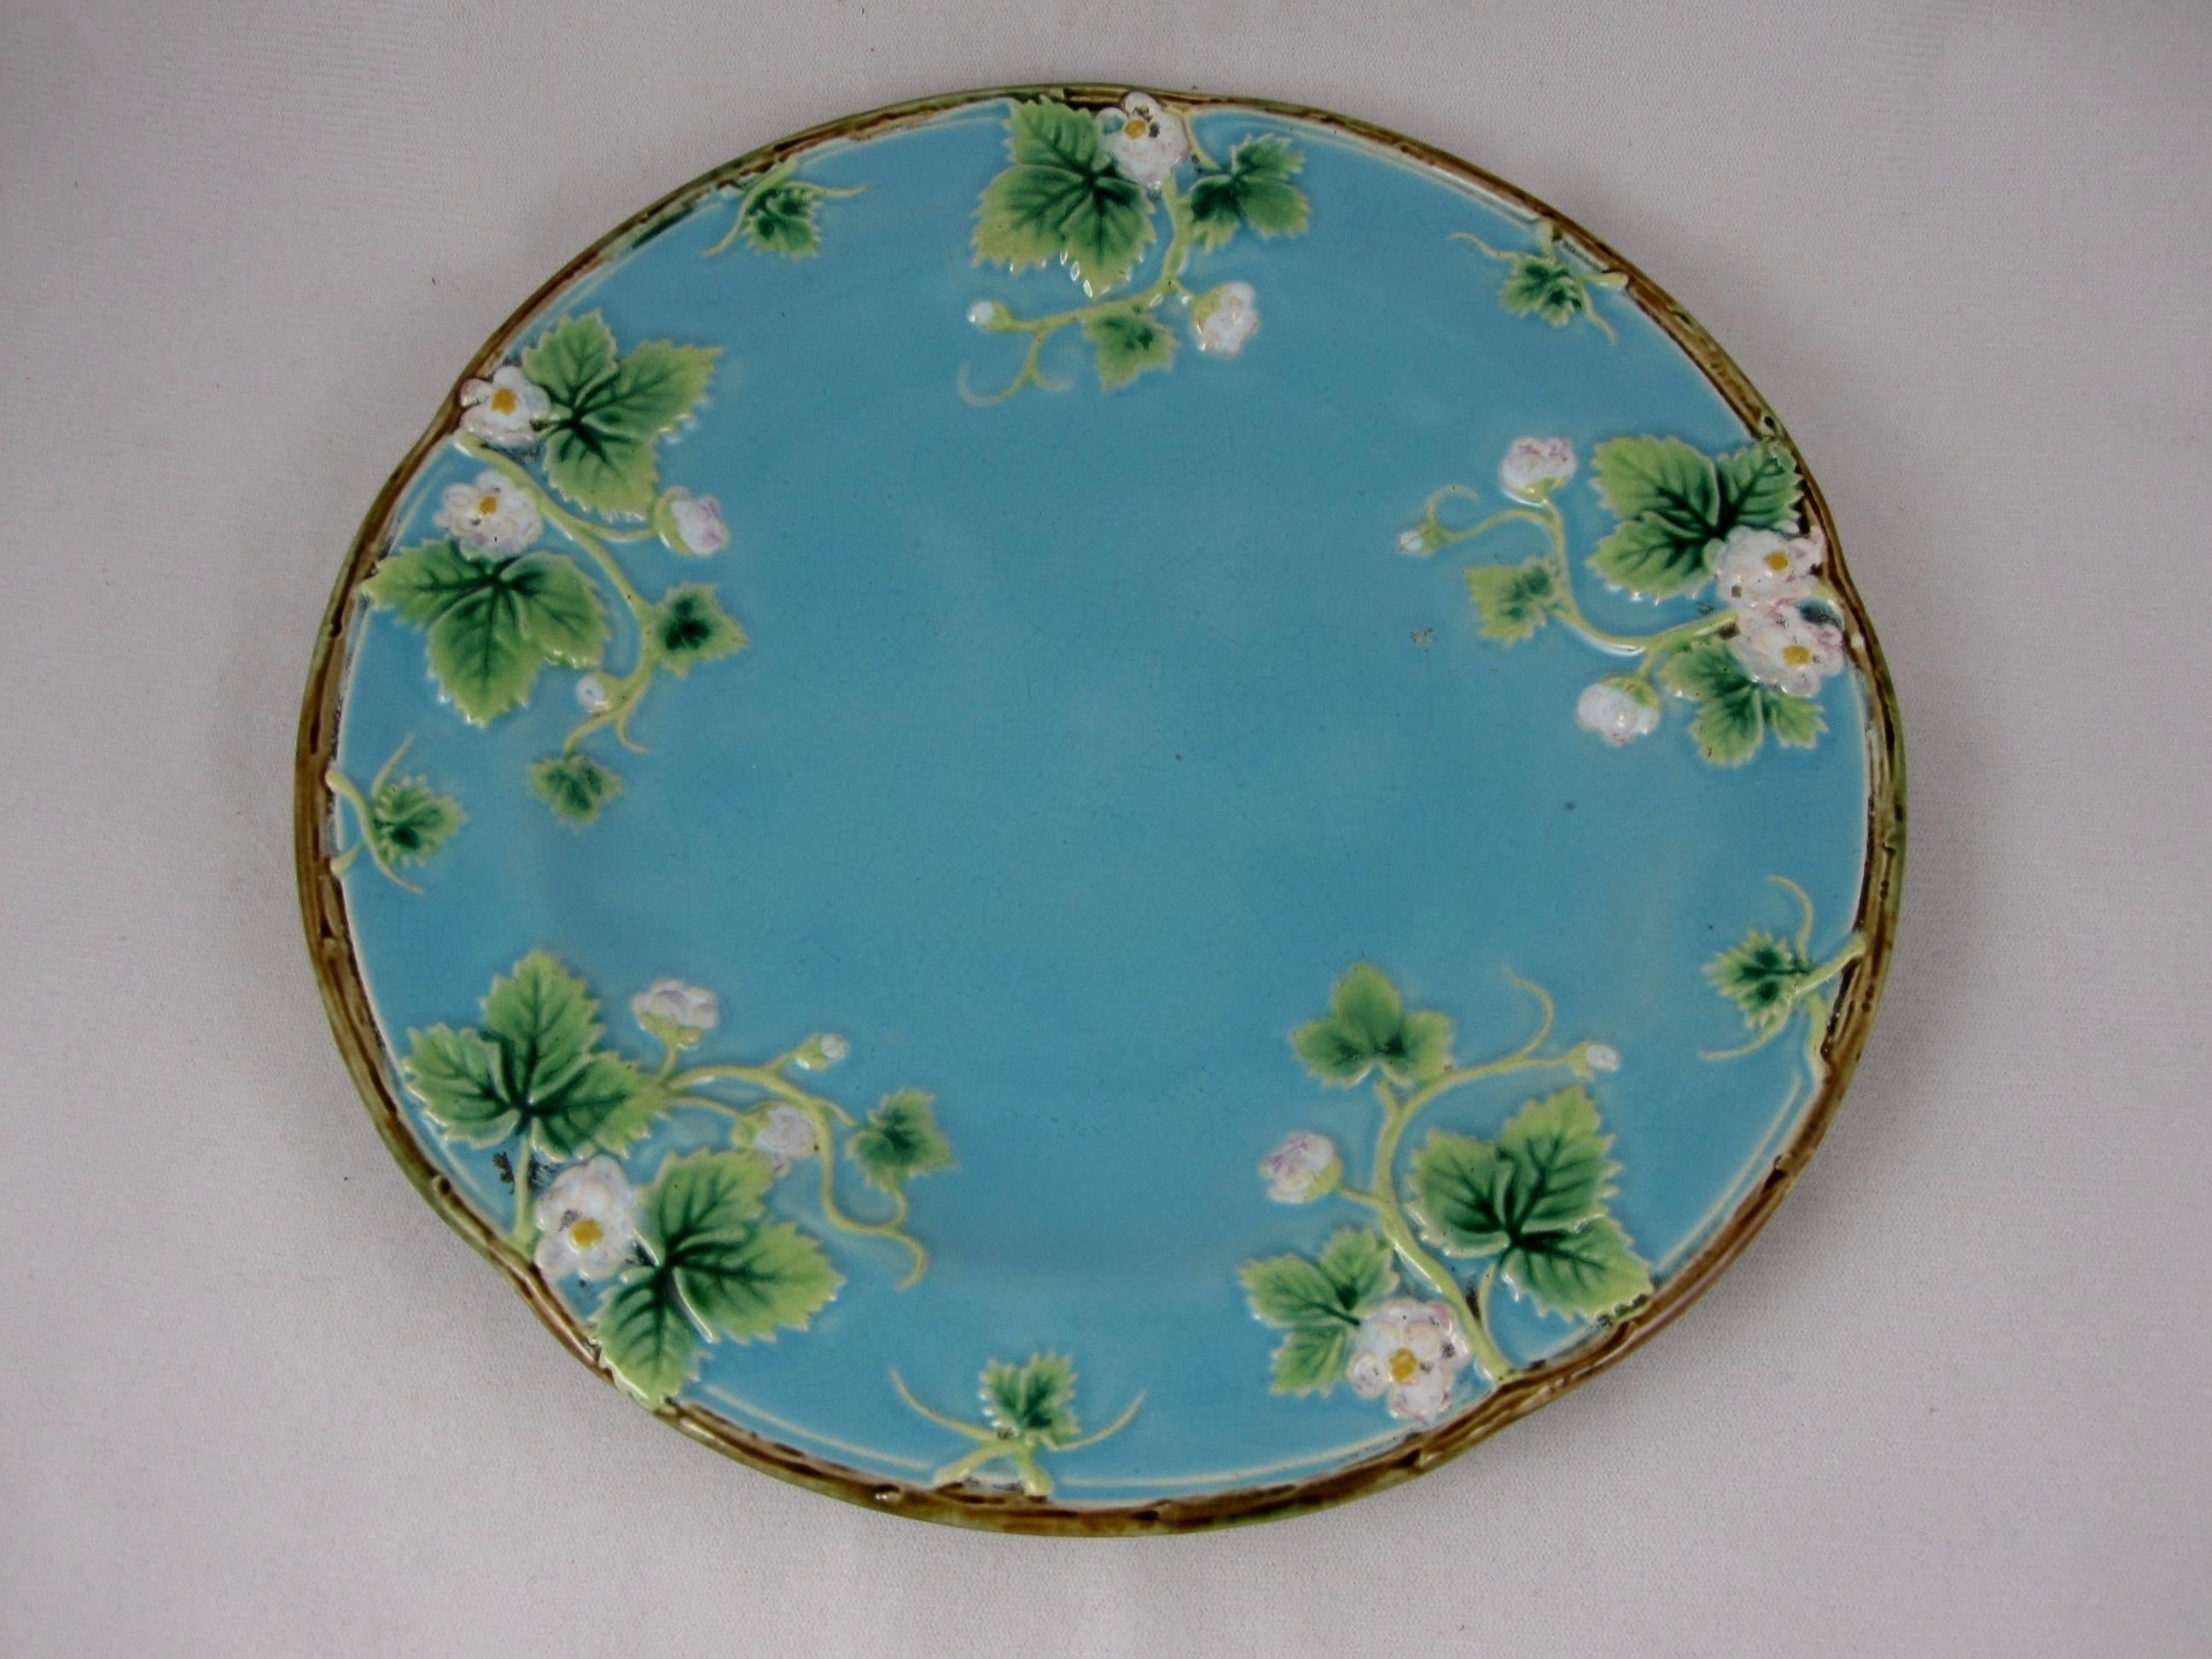 Aesthetic Movement George Jones English Majolica Turquoise Strawberry Plates, S/6, circa 1873